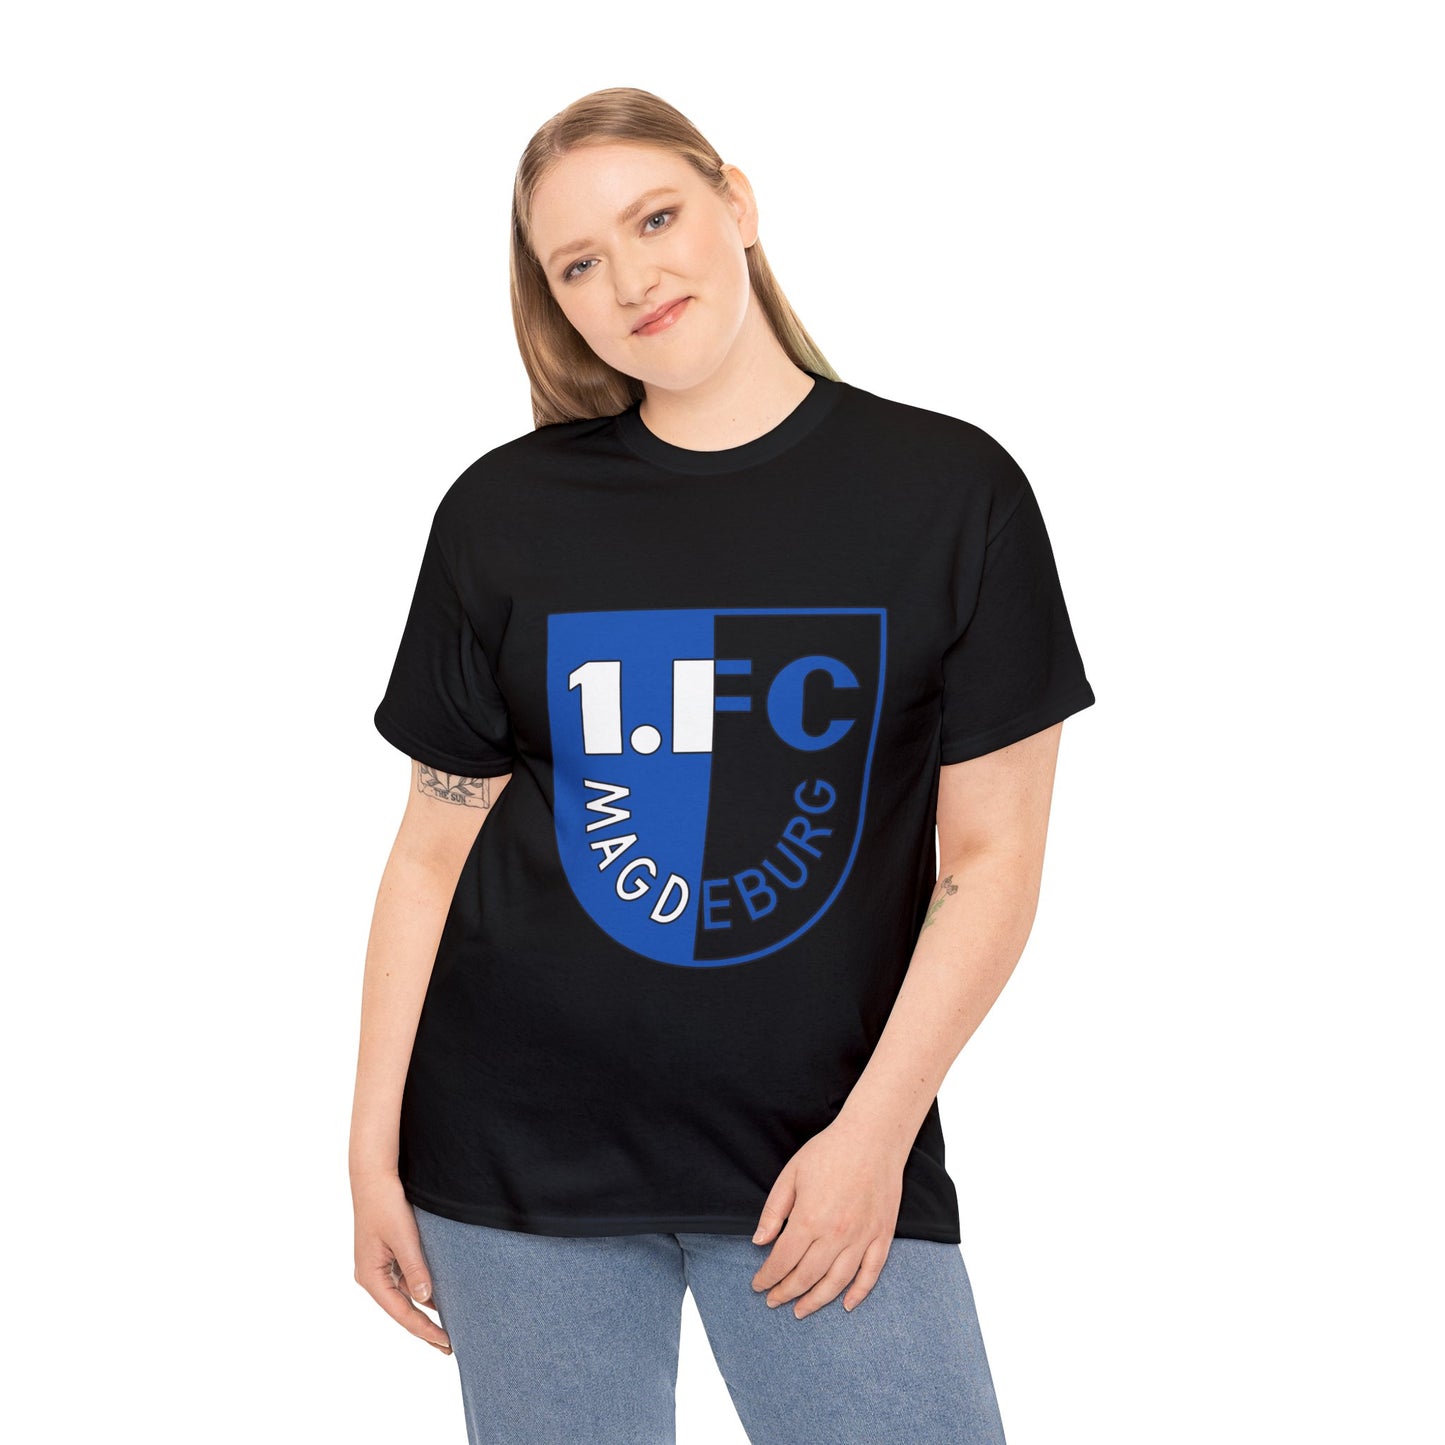 1 FC Magdeburg (1970's logo) Unisex Heavy Cotton T-shirt